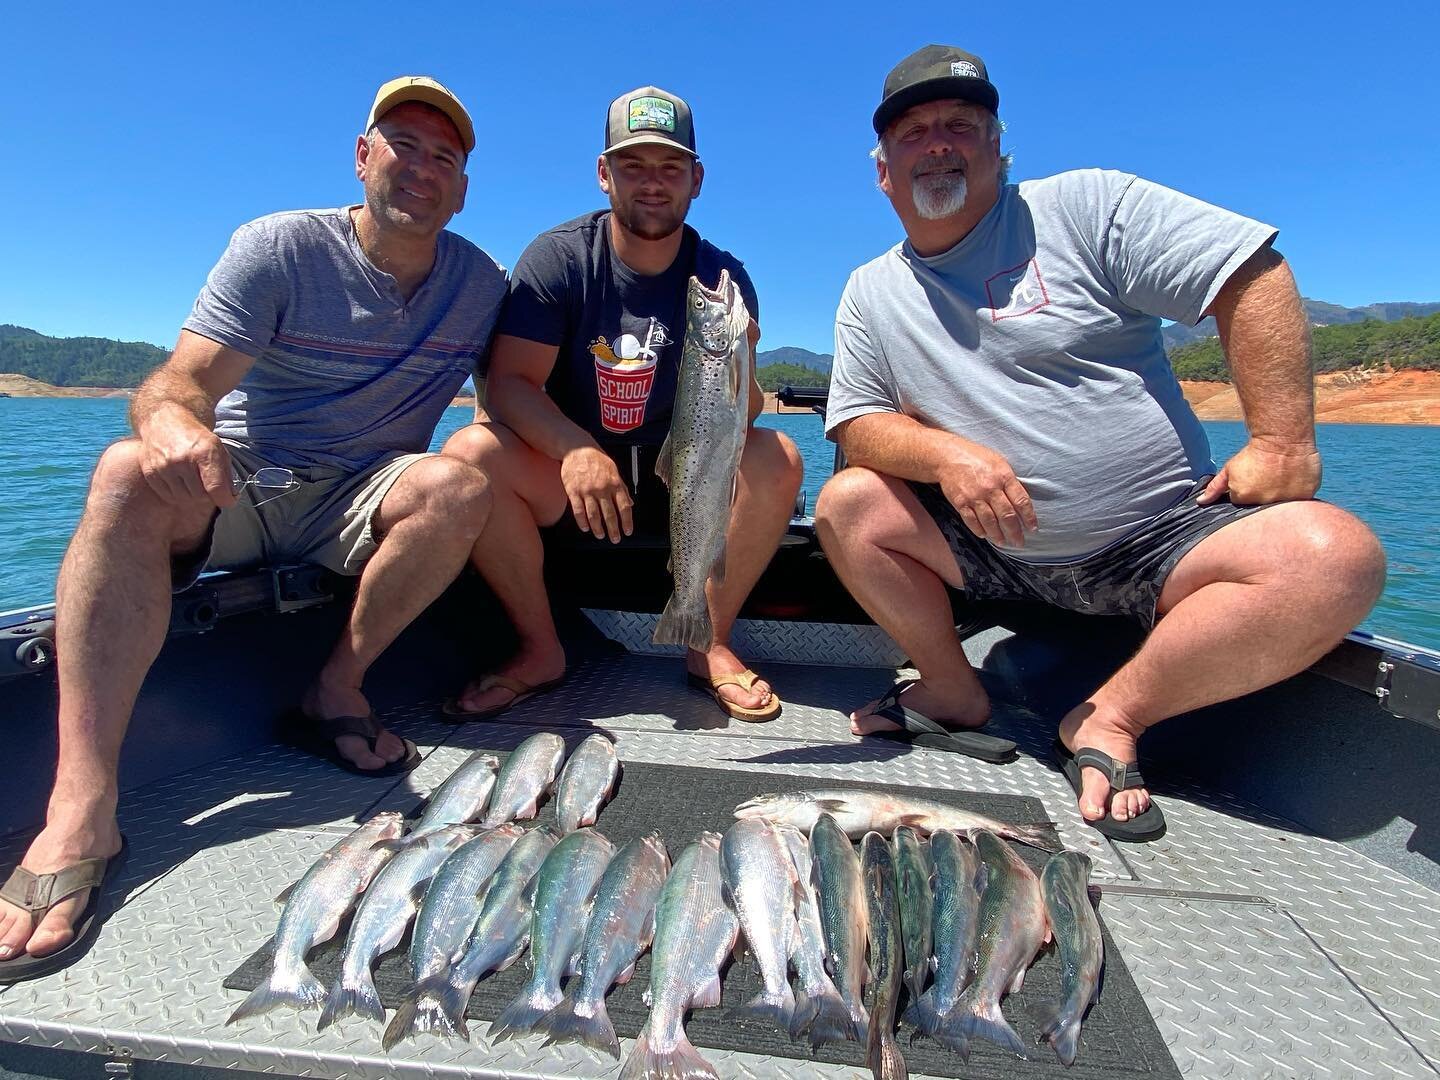 #jtfishingredding it was a good day to be on Shasta Lake, these guys filled the cooler with Kokanee/king salmon and Browns. 
@jeffgoodwinfishingteam 
.
.
.
.
@pautzke_bait @bradskillerfishinggear #shasta #kingsalmon #kokeneesalmon #northerncalifornia